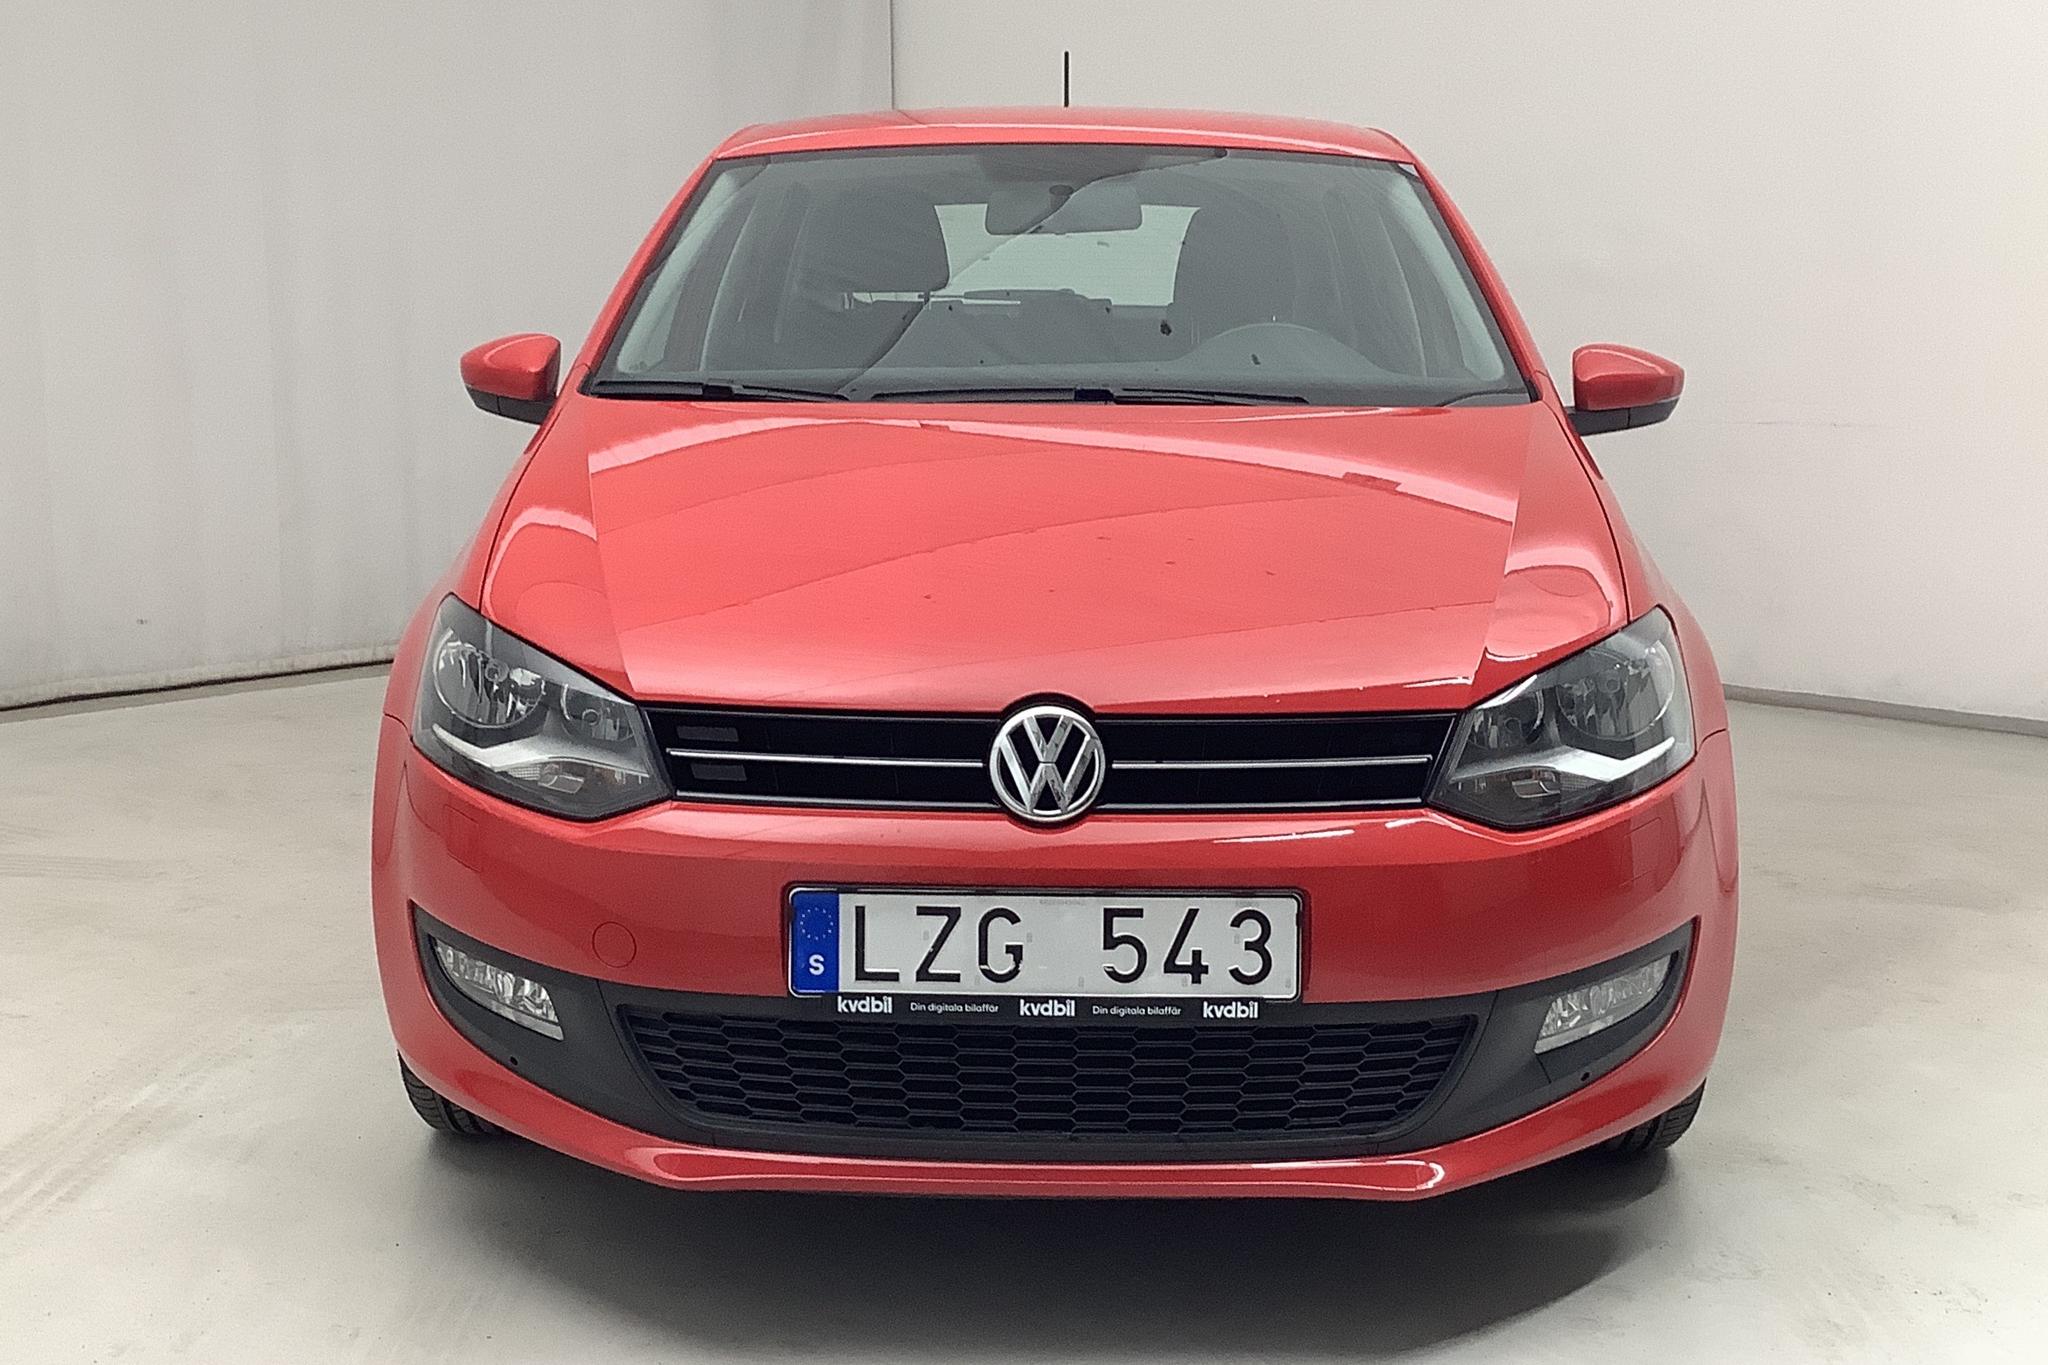 VW Polo 1.4 5dr (85hk) - 10 745 mil - Manuell - röd - 2014